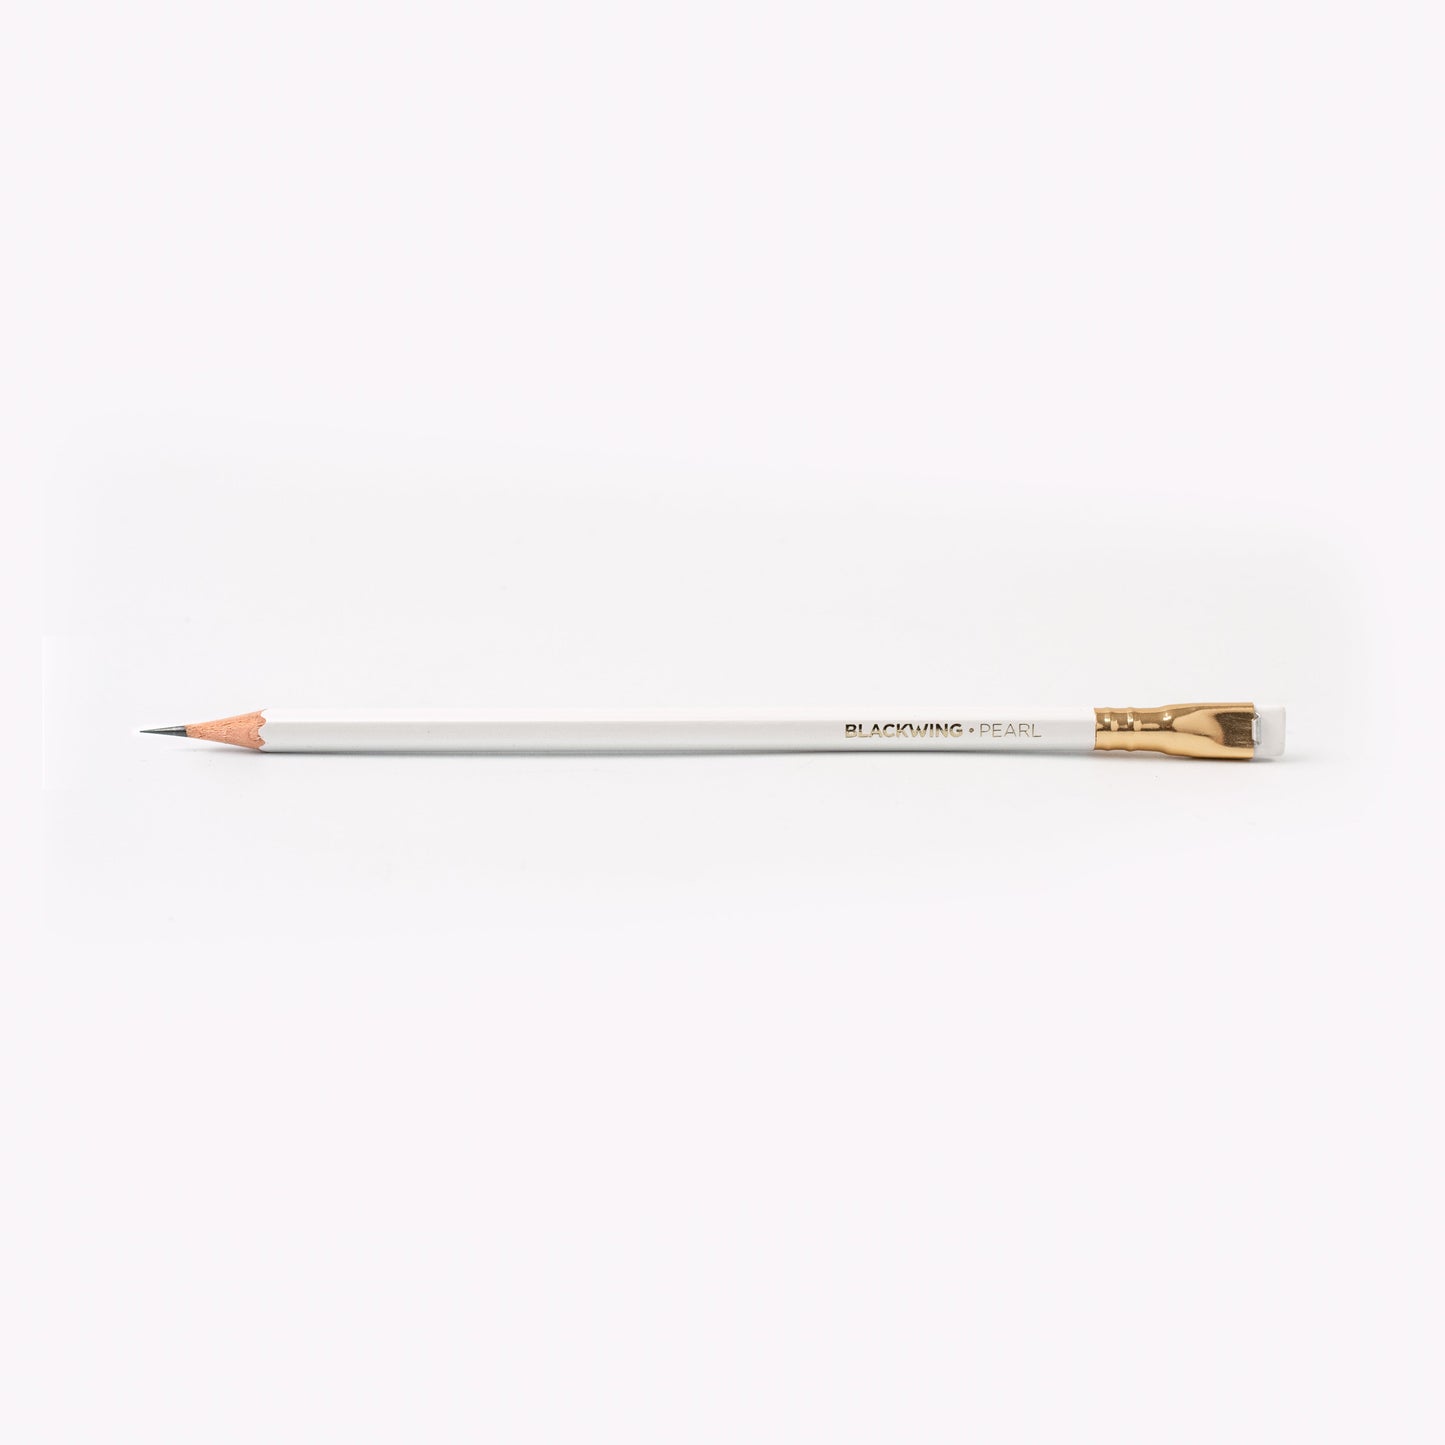 Blackwing Pearl Pencils